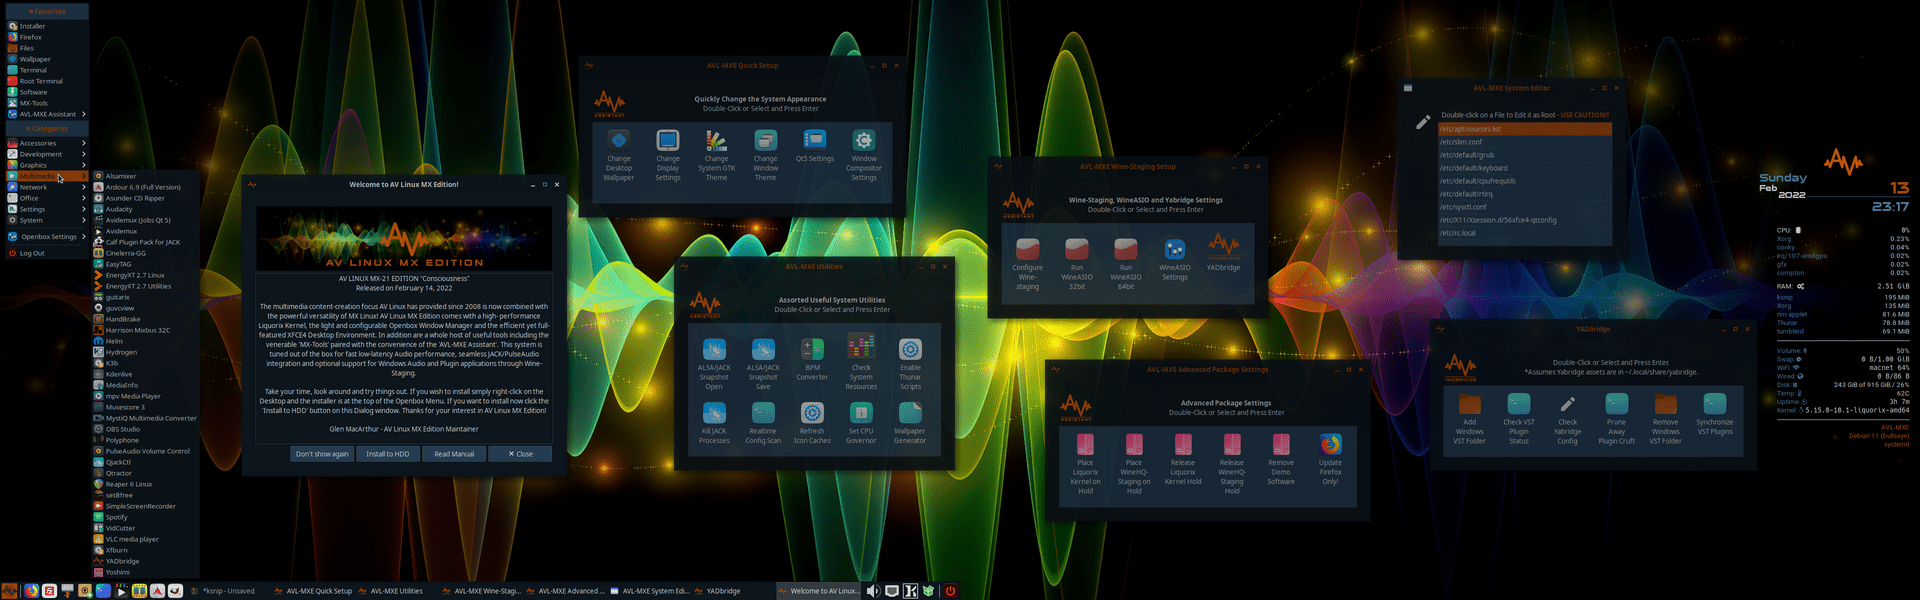 Evie Linux MX-21 .  feature set of